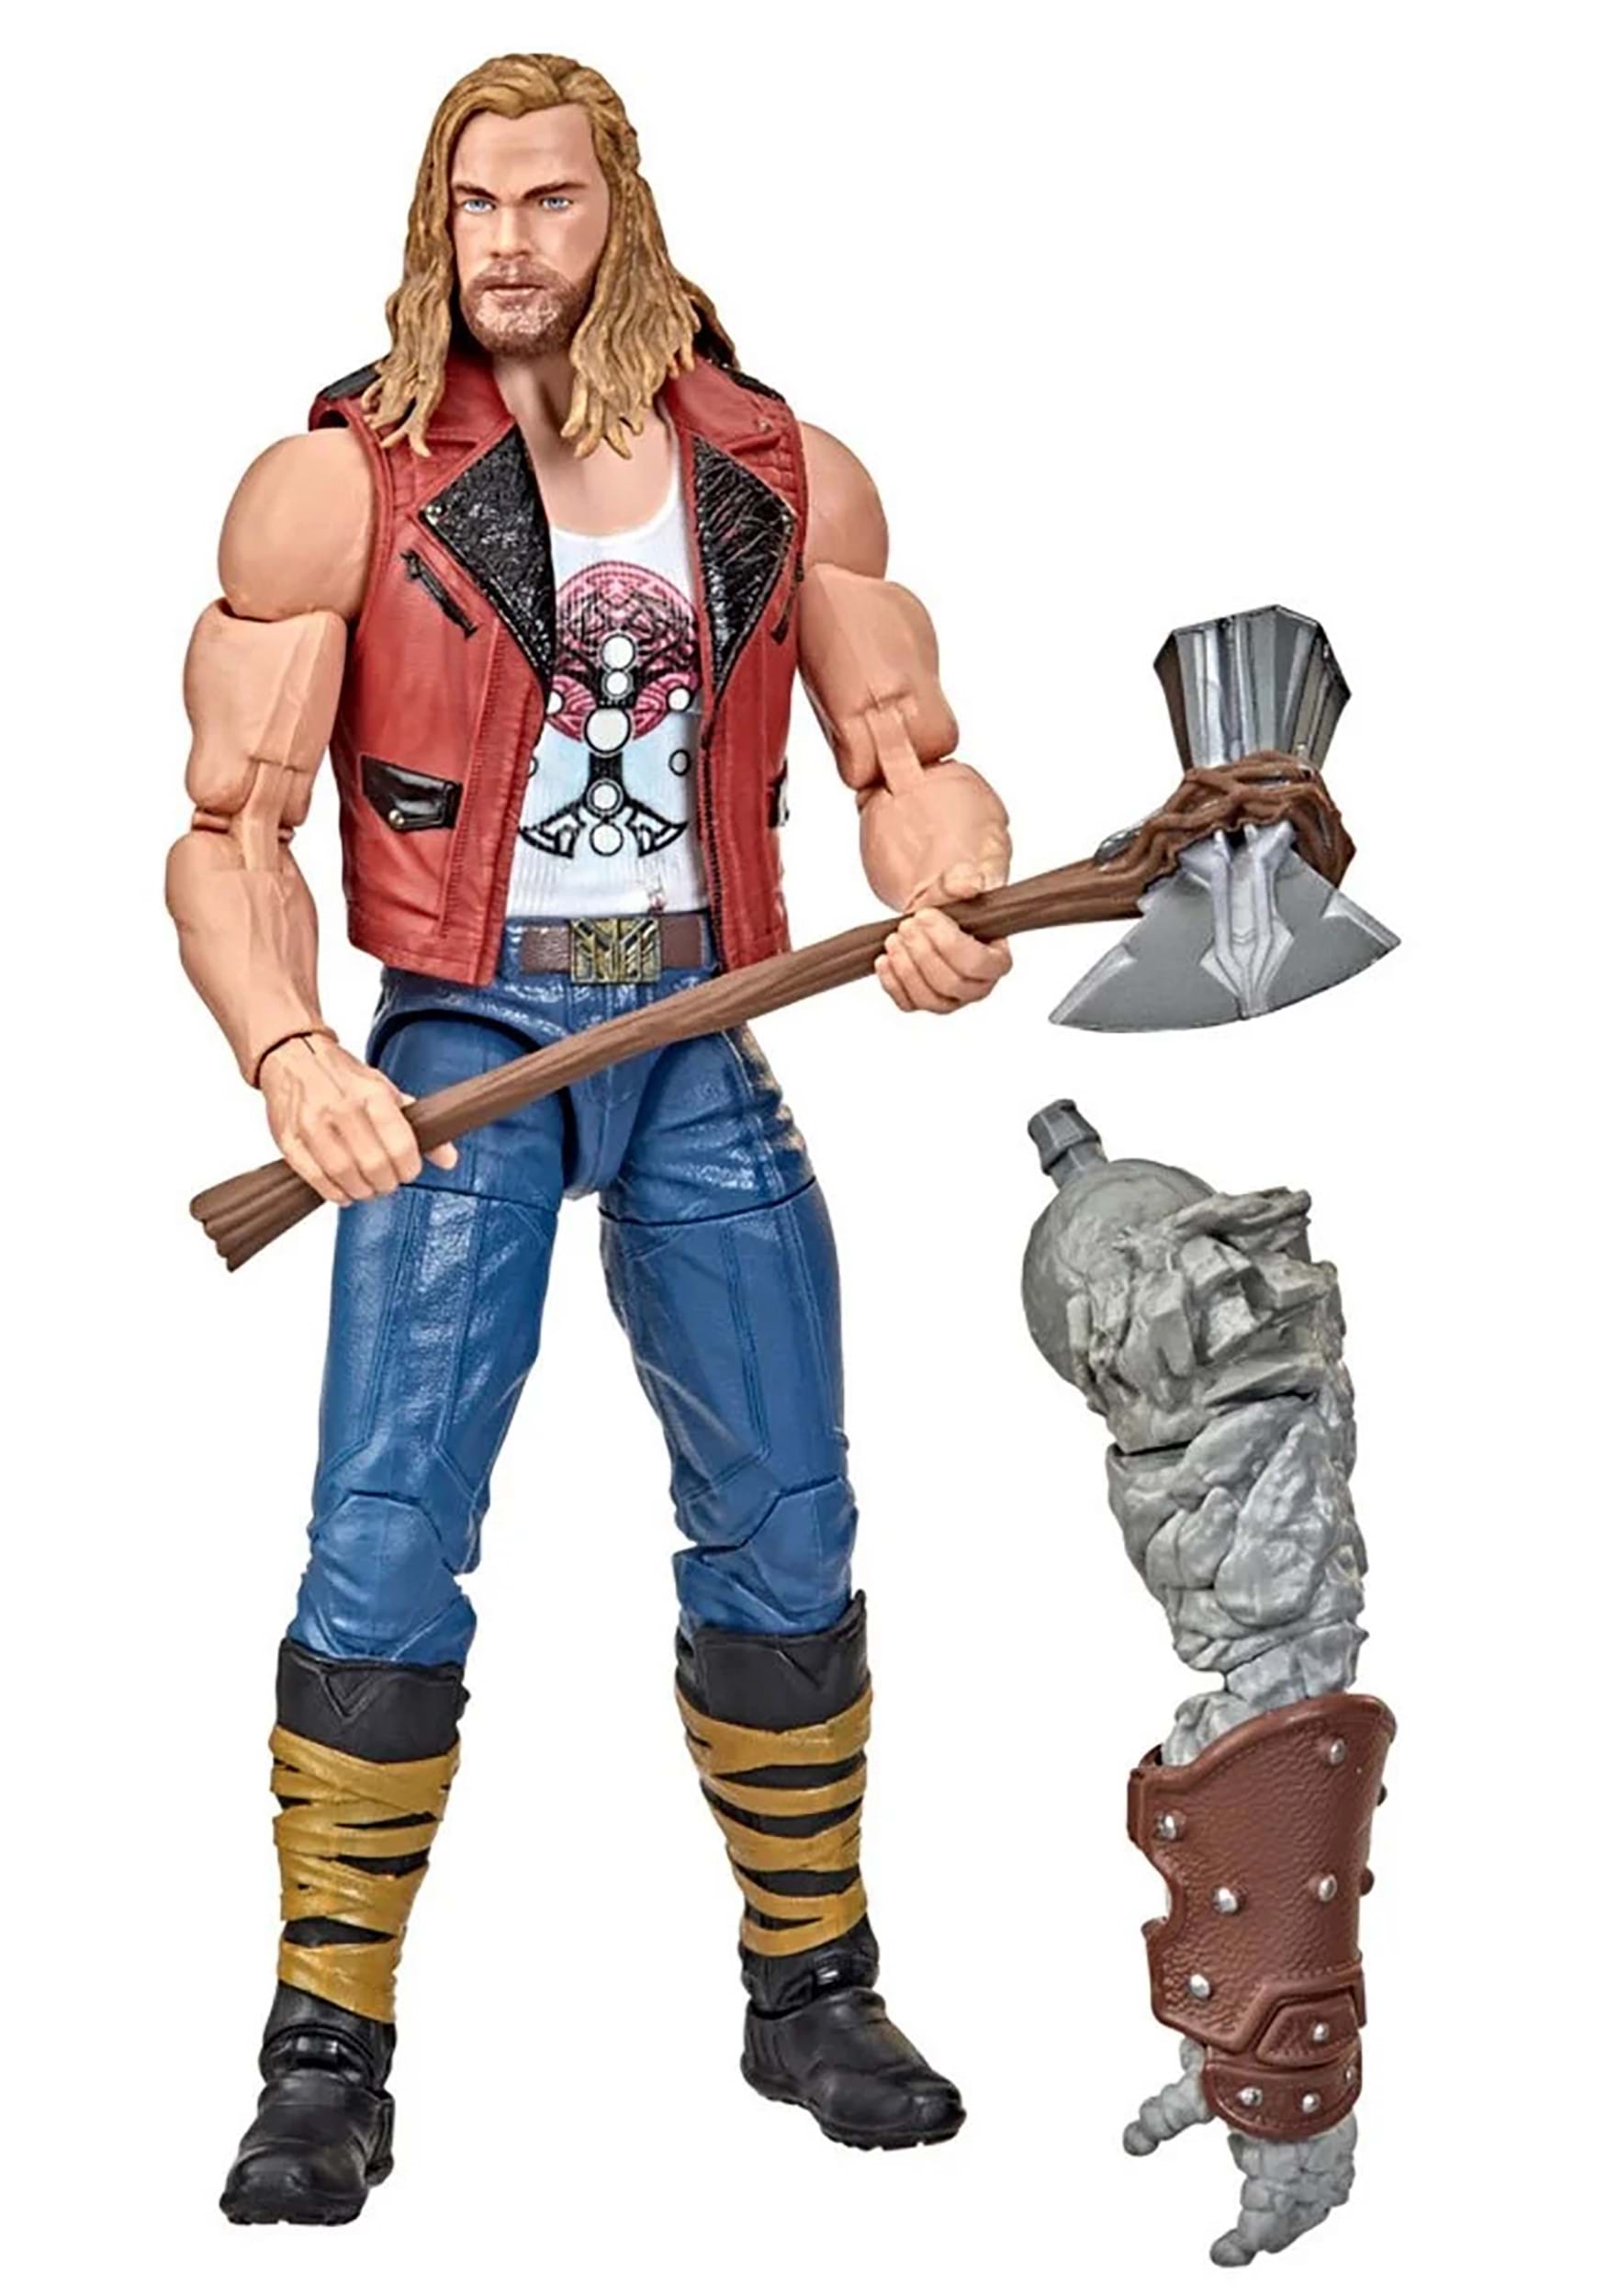 Marvel Legends Thor: Love and Thunder Star-Lord Figure (BAF)